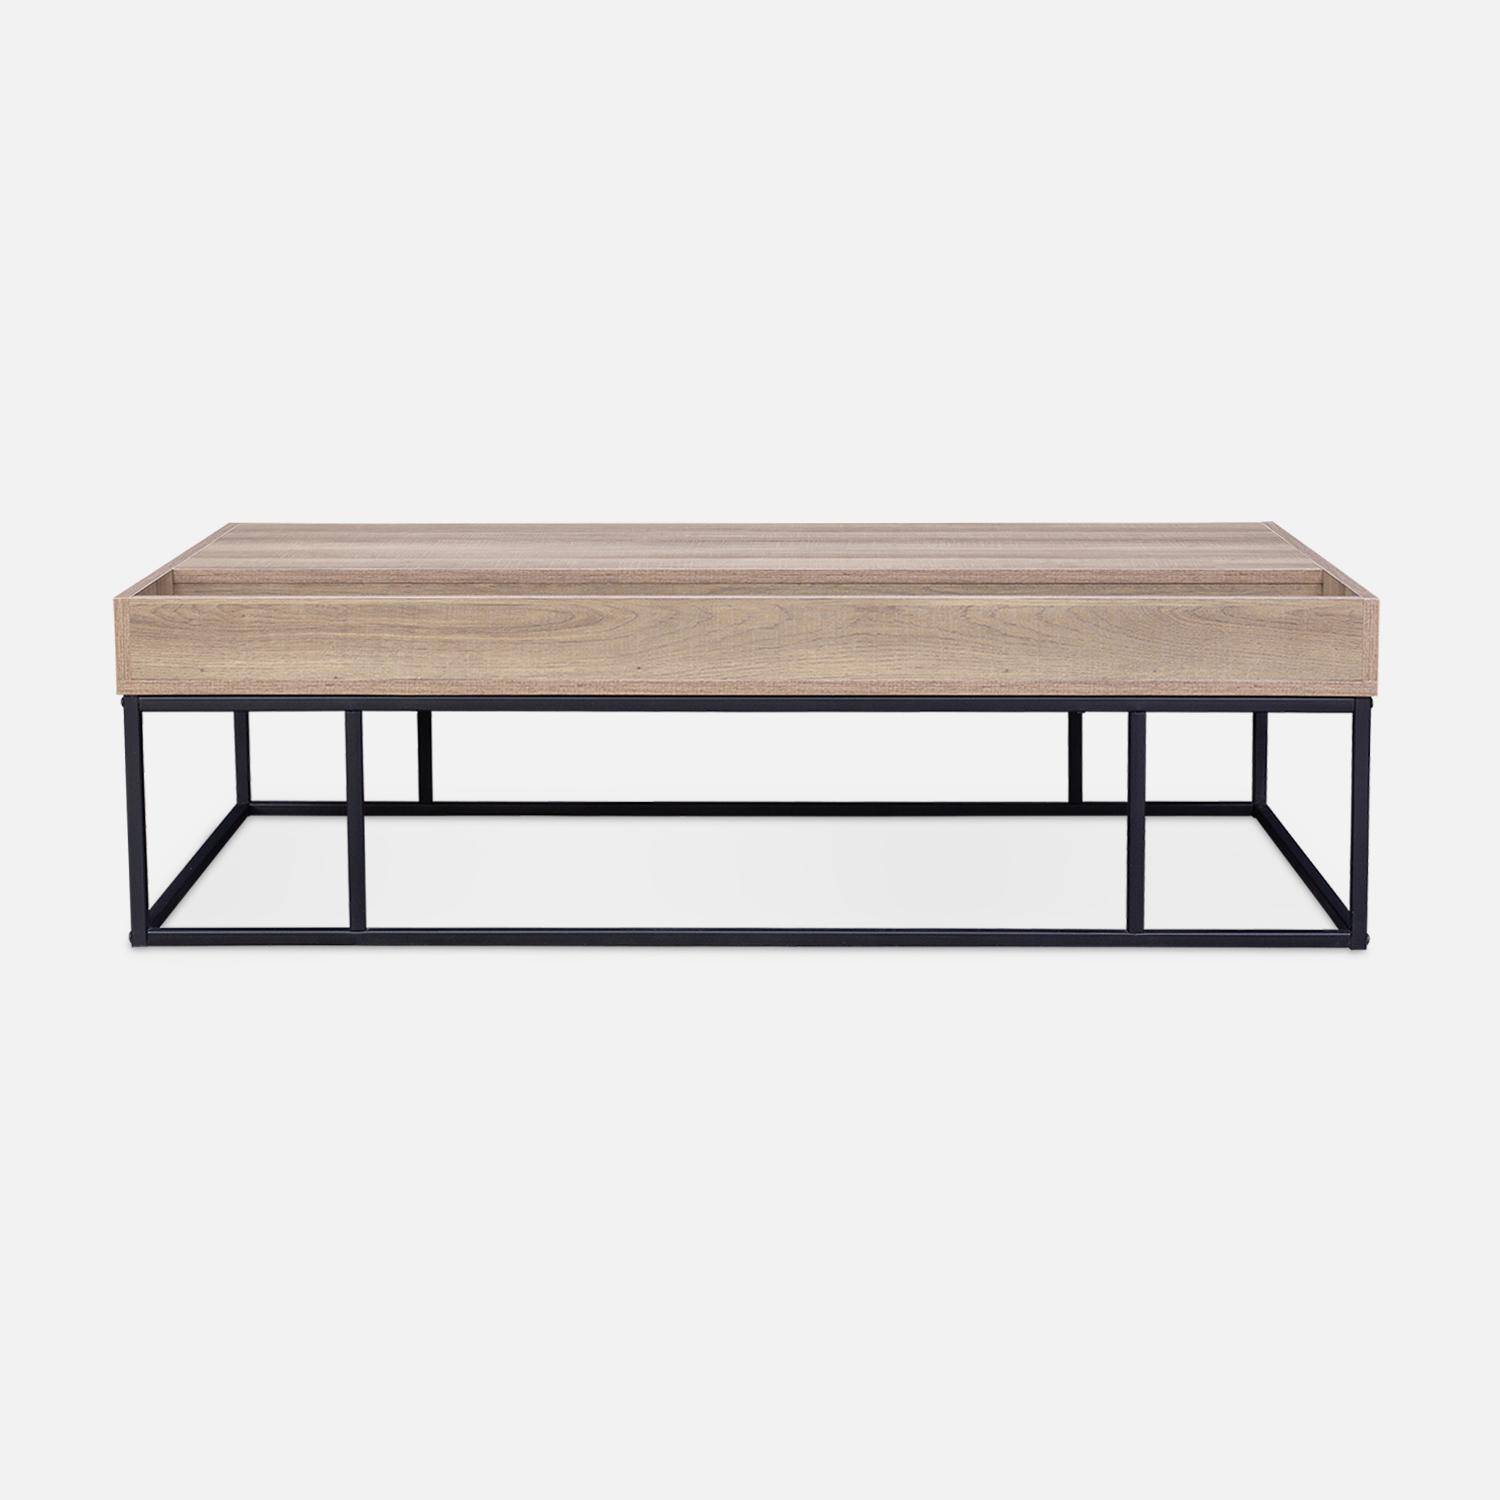 Metal and wood-effect coffee table, 120x59x34.5cm, Magnus, Black,sweeek,Photo4